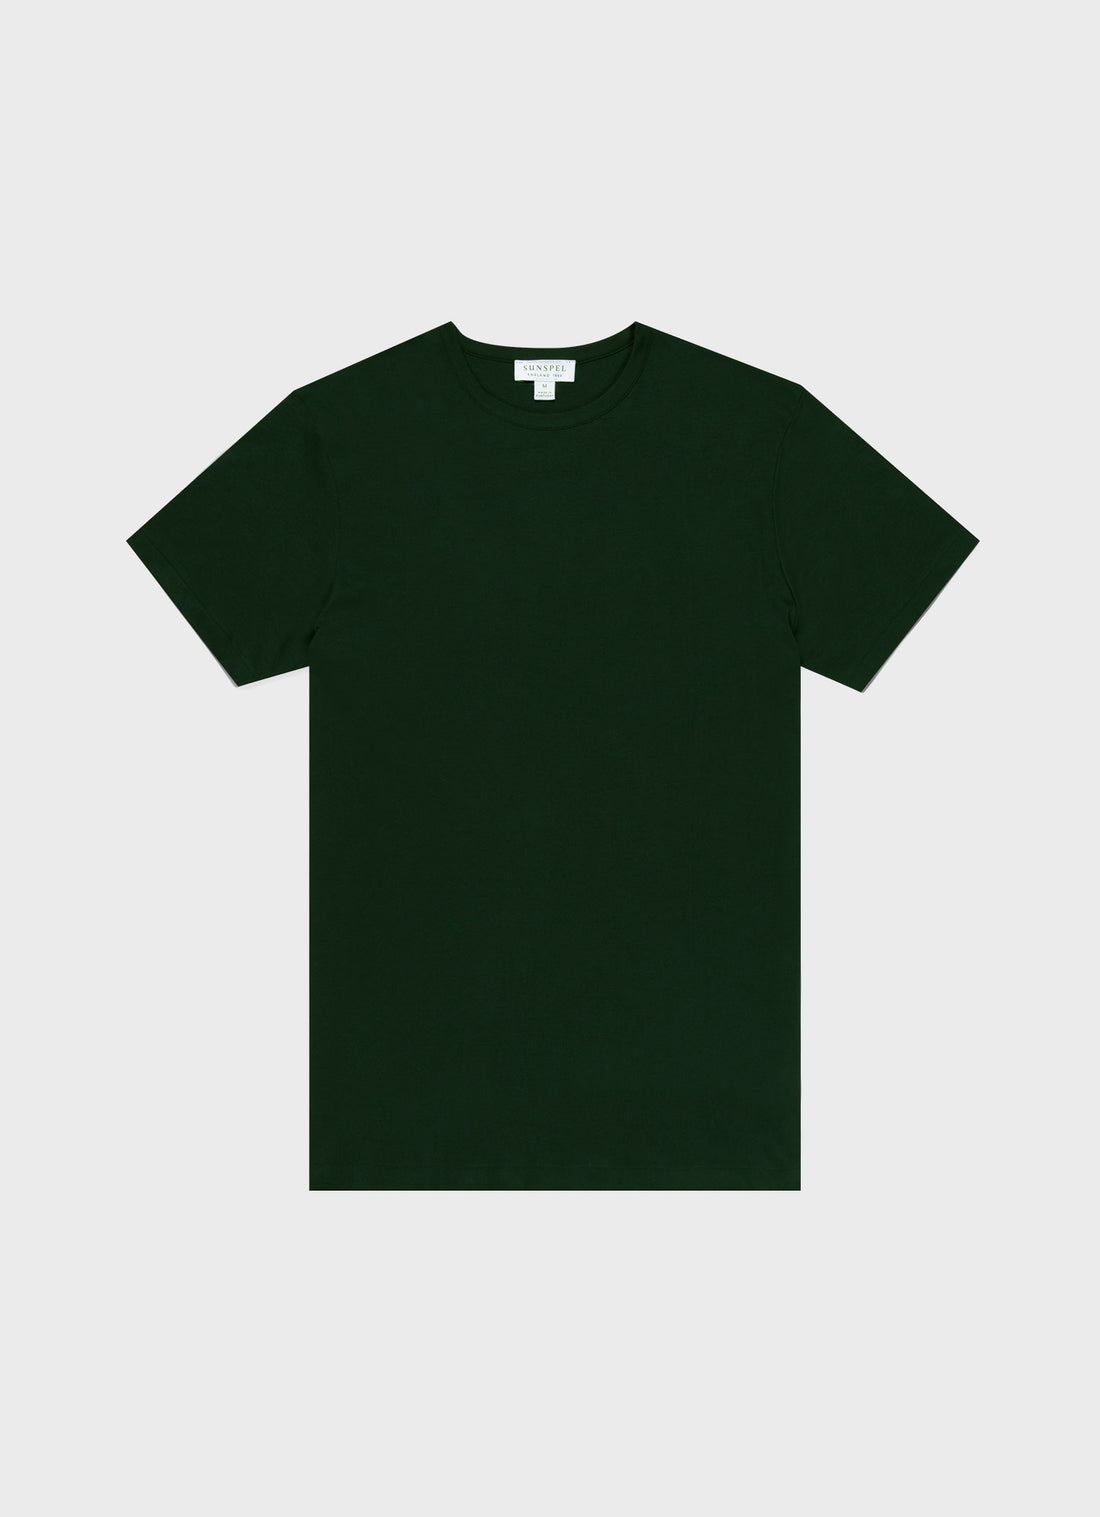 Men's Sea Island Cotton T-shirt in Seaweed